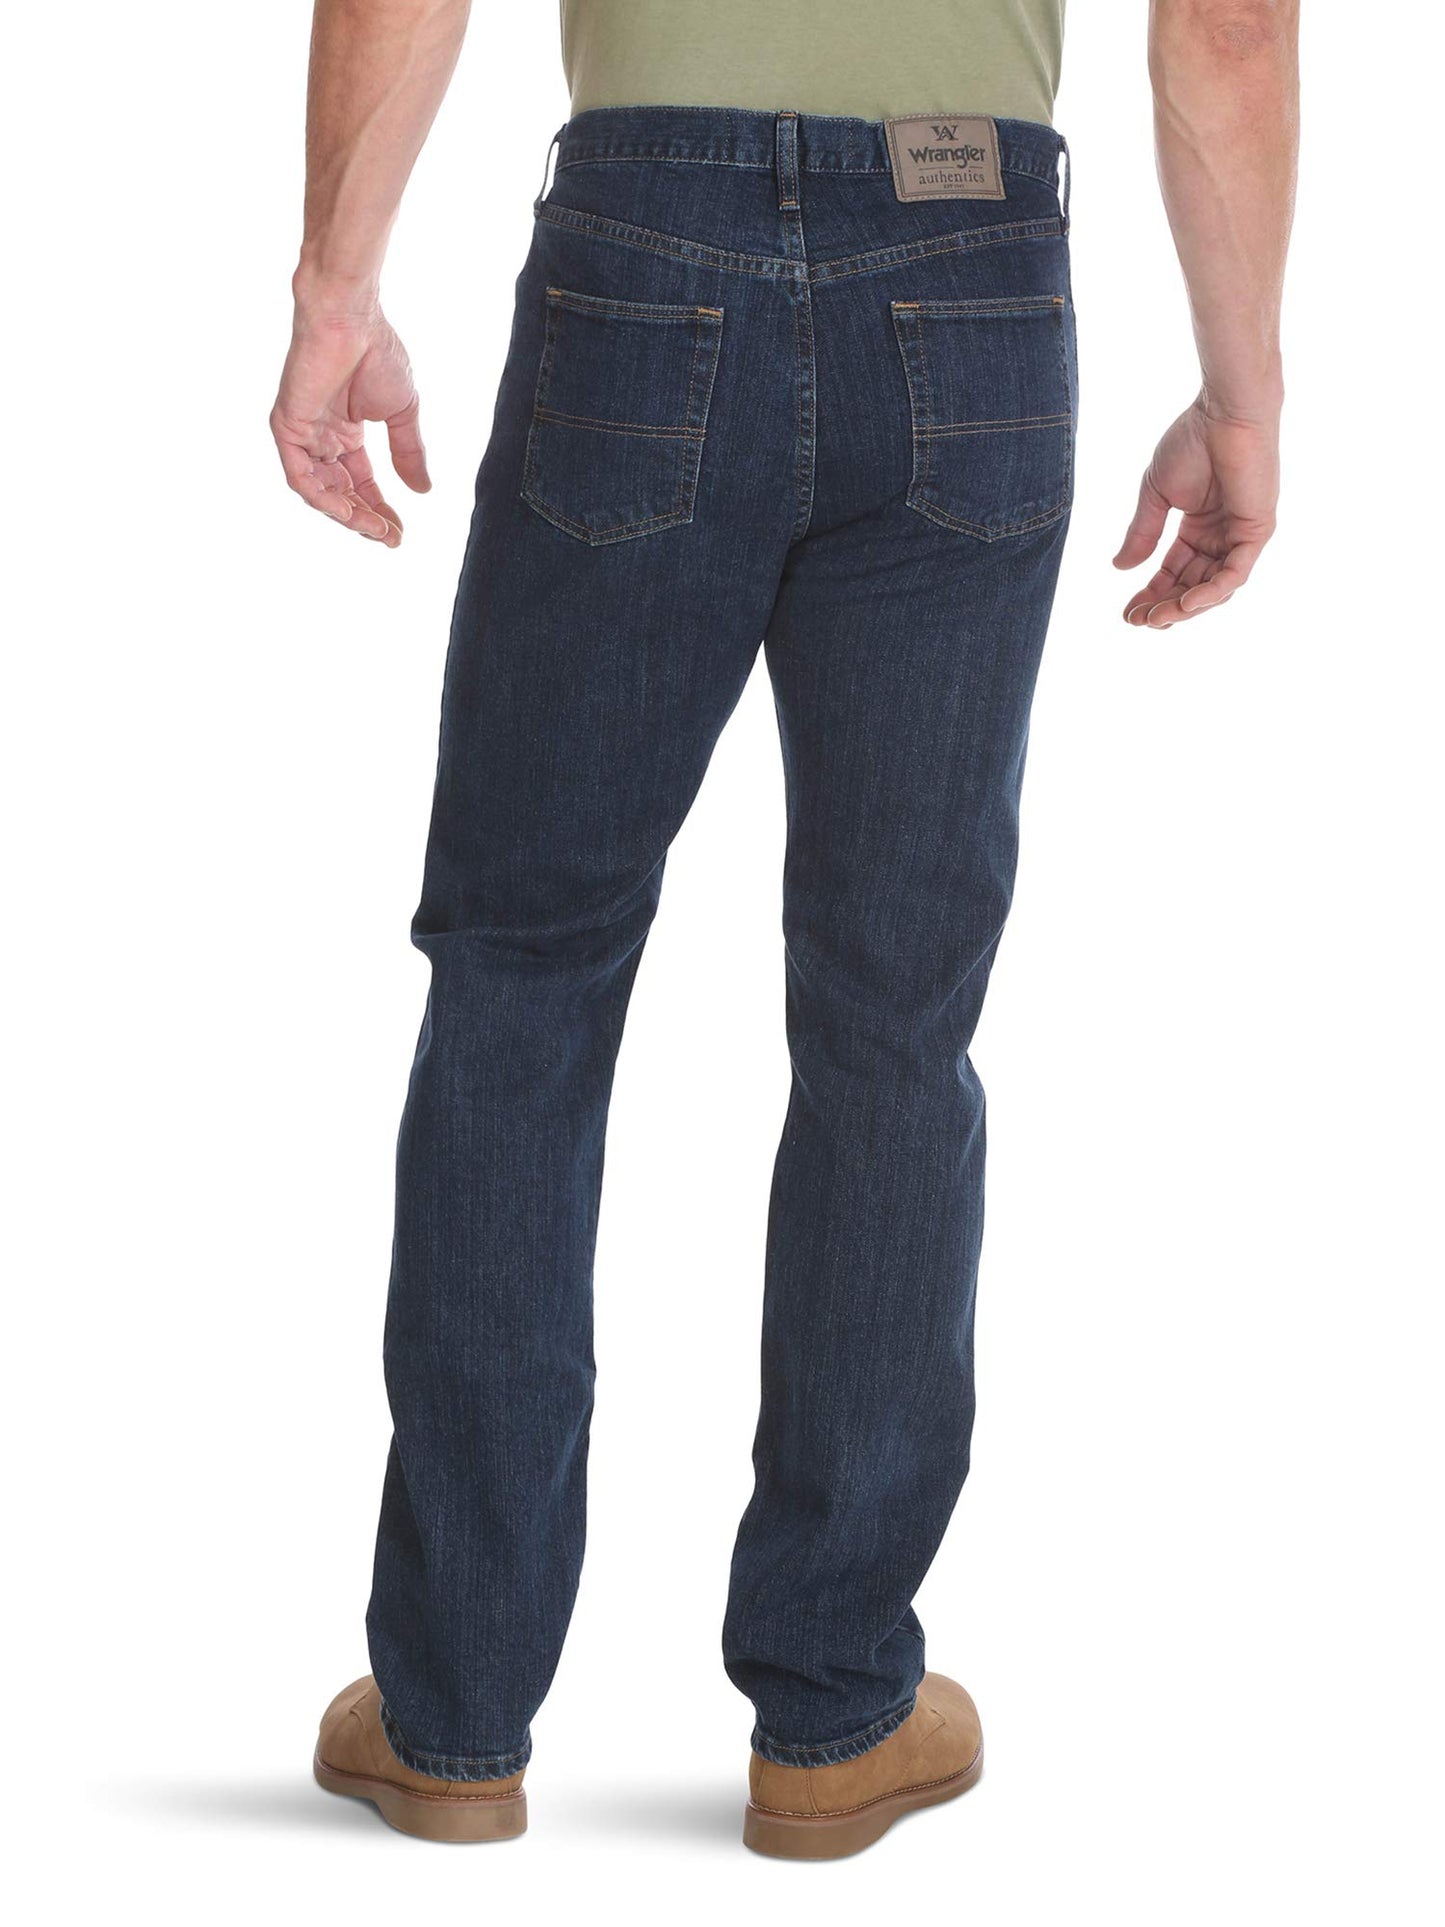 Wrangler Authentics Men's Classic 5-Pocket Regular Fit Jean, Dark Indigo Flex, 36W x 30L